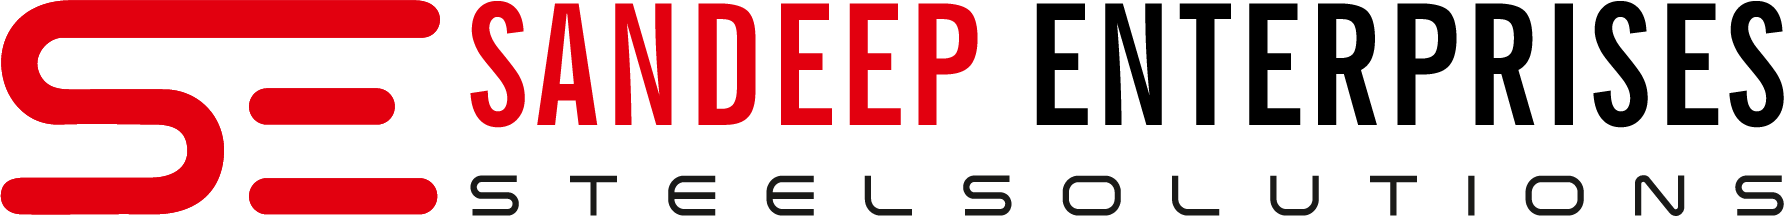 sandeep-enterprises-logo